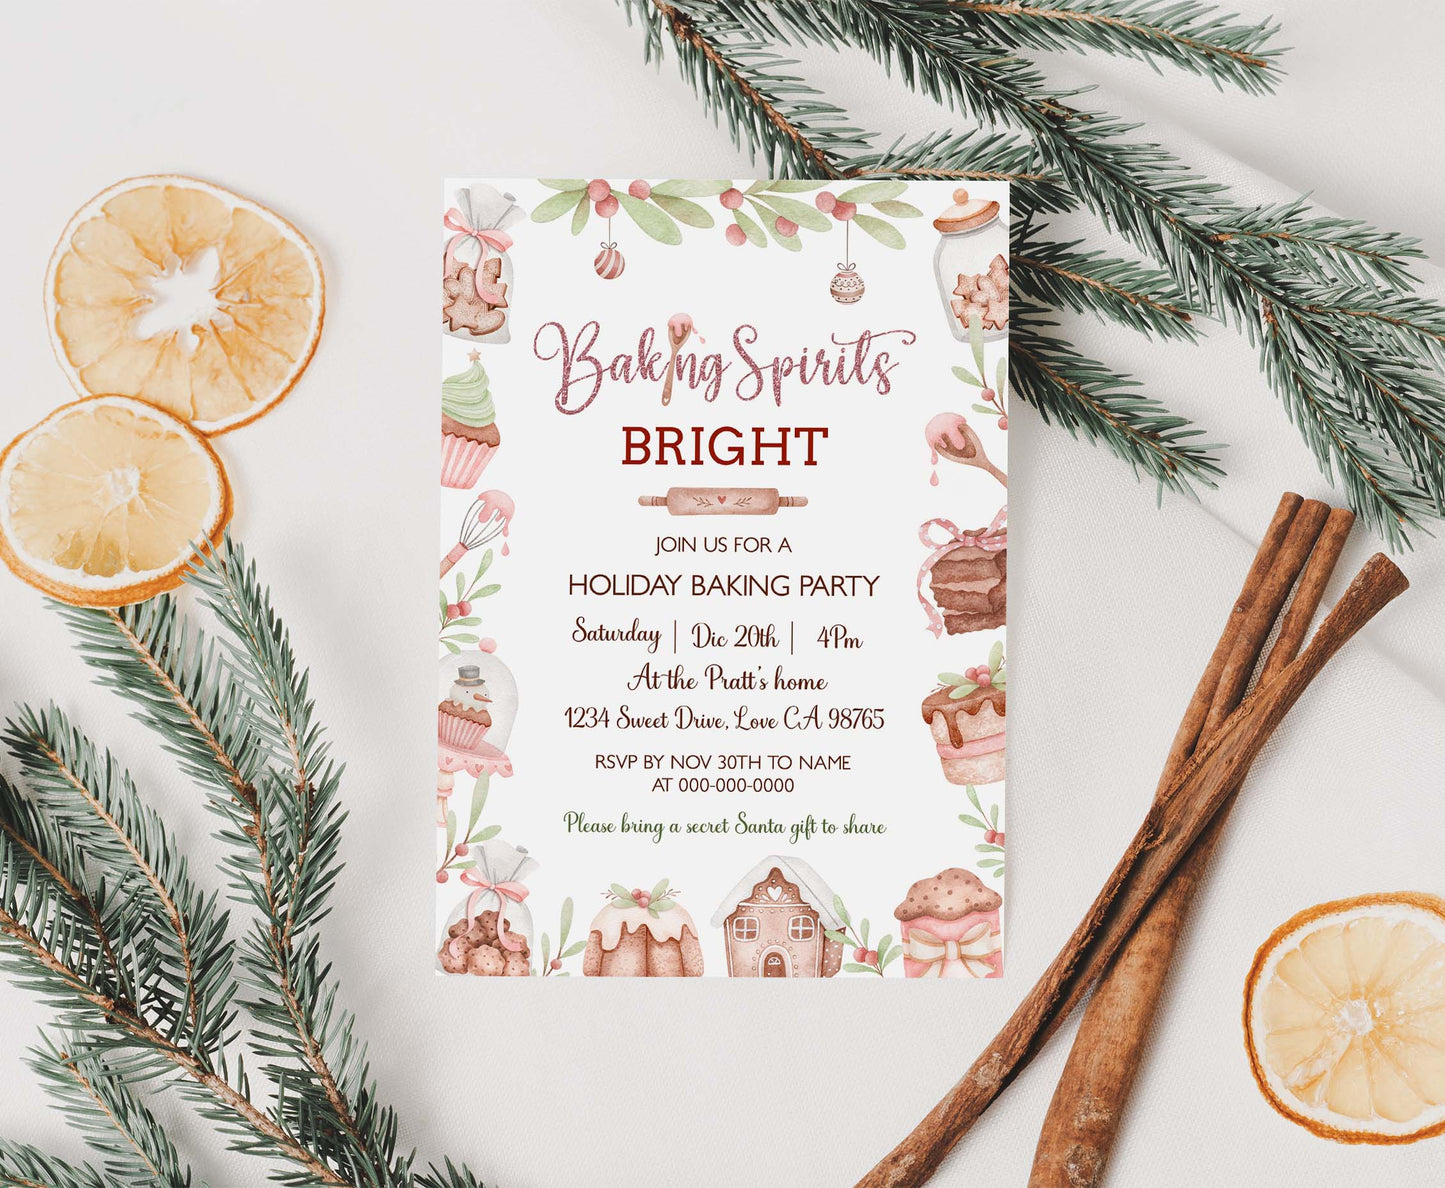 Christmas party invitation | Baking spirits bright invite | 112F